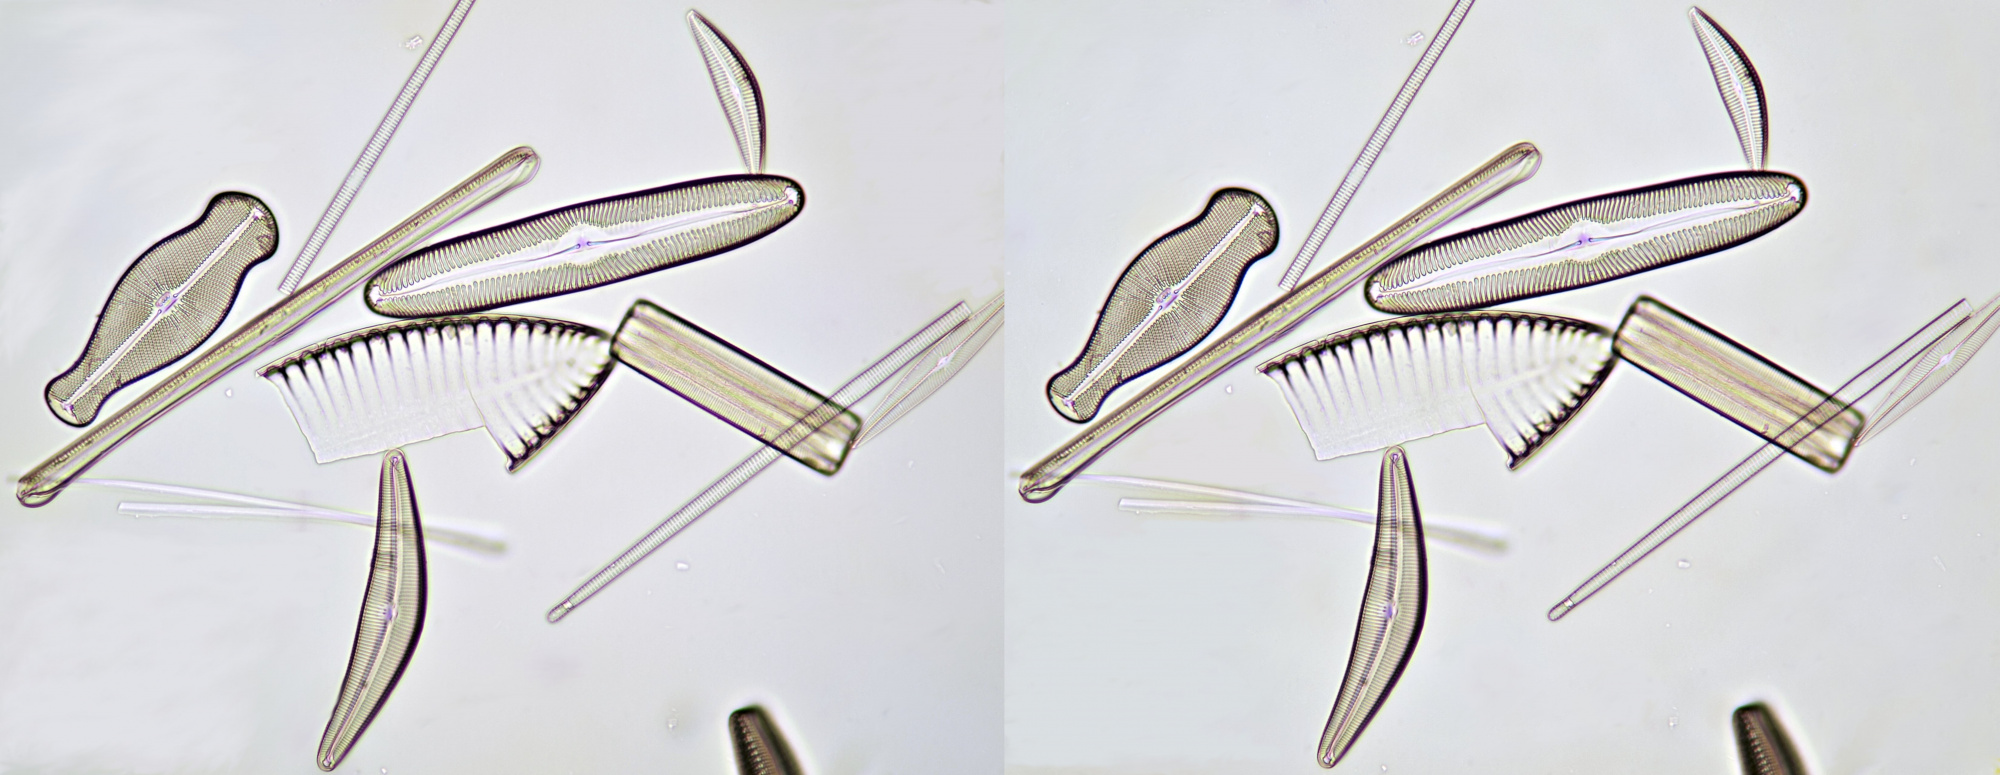 Diatomeeën Hybride oculair versus afocale methode